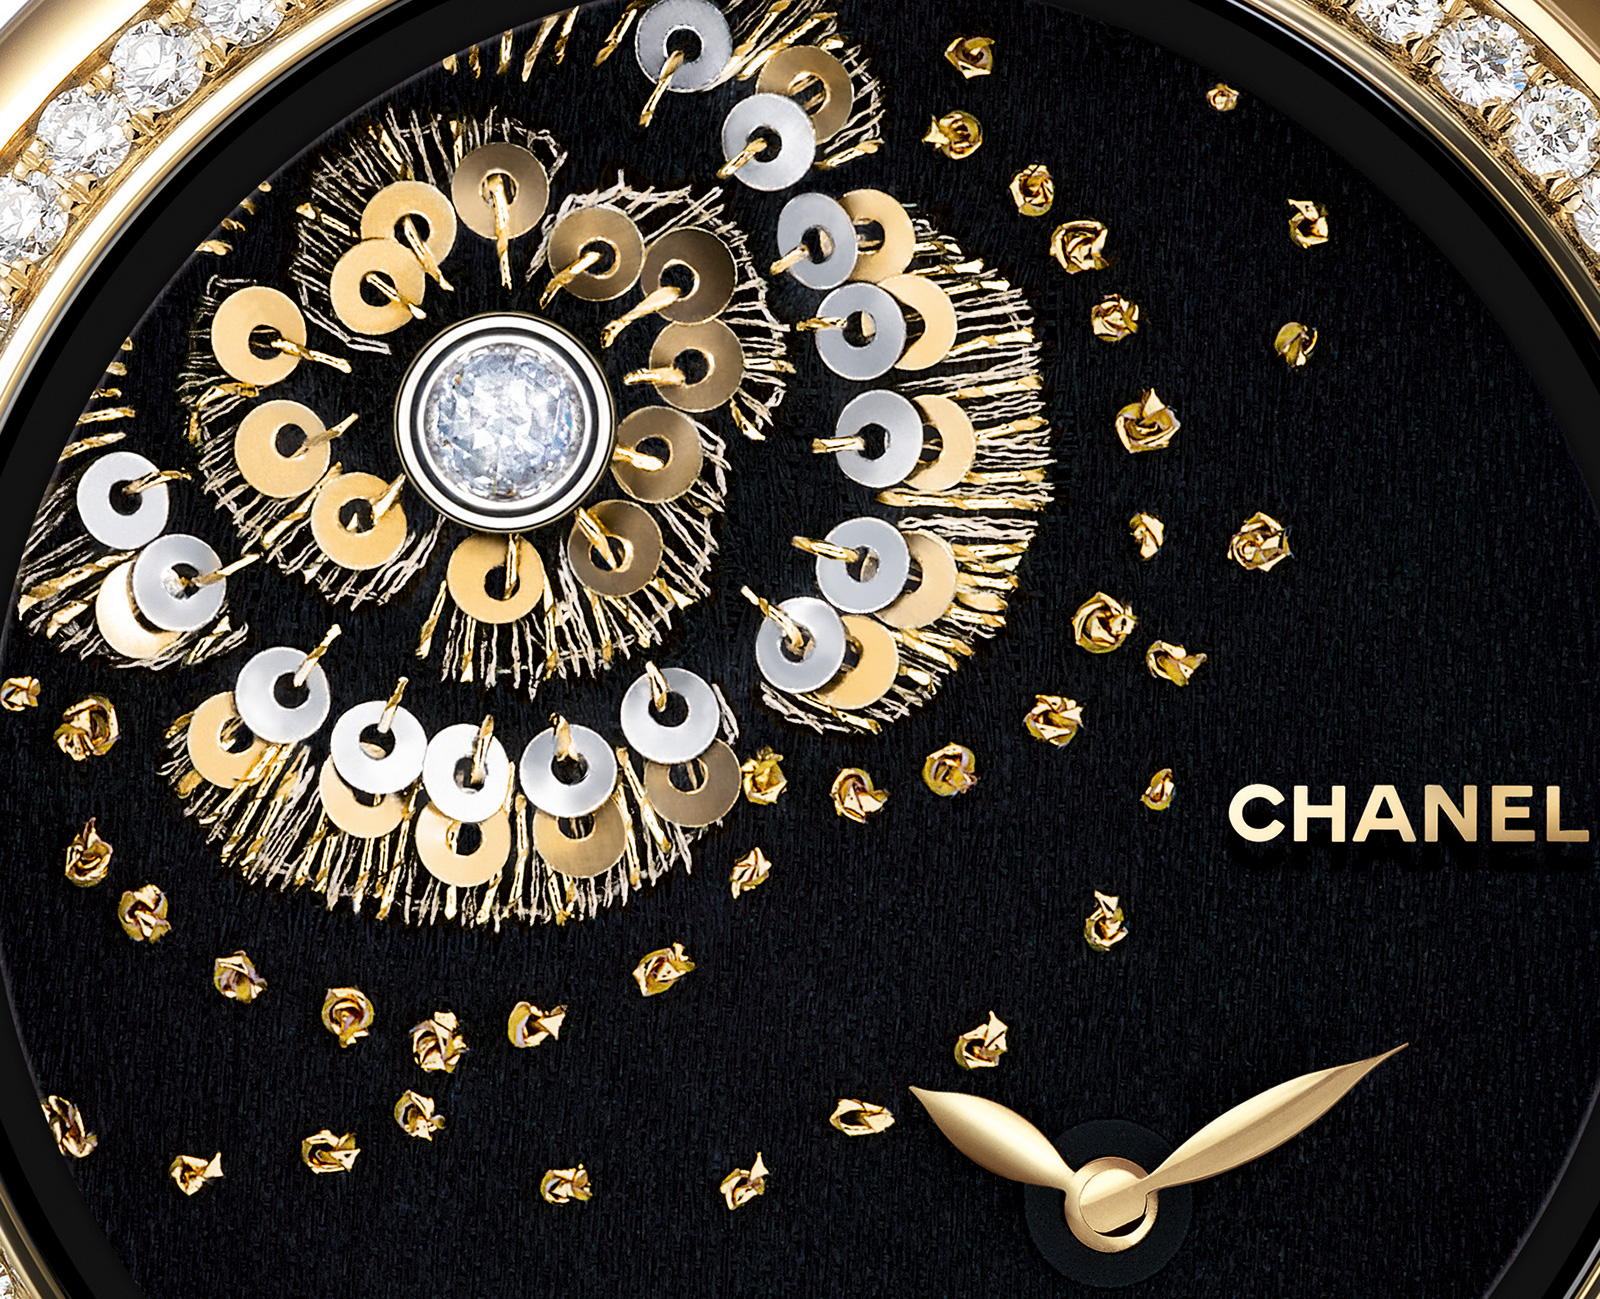 Chanel Unveils The Mademoiselle Privé Camélia, With A Gold